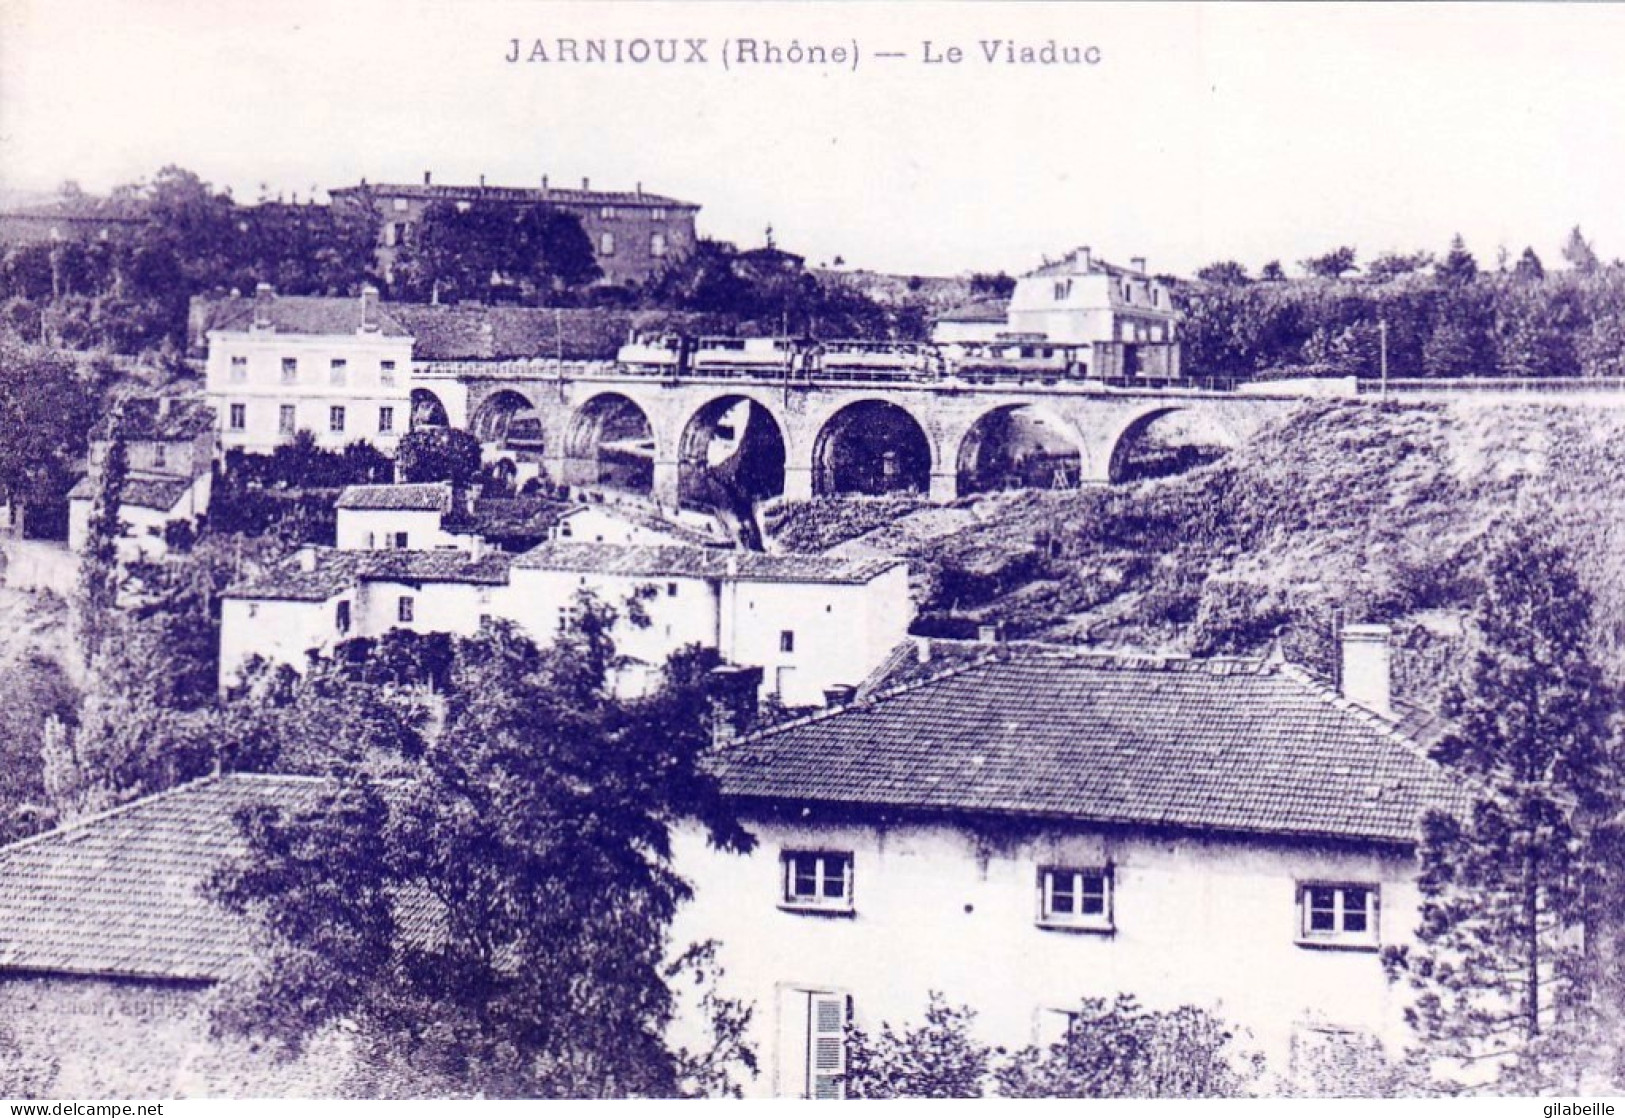 Photo - 69 - Rhone - JARNIOUX - Le Viaduc - Retirage - Unclassified